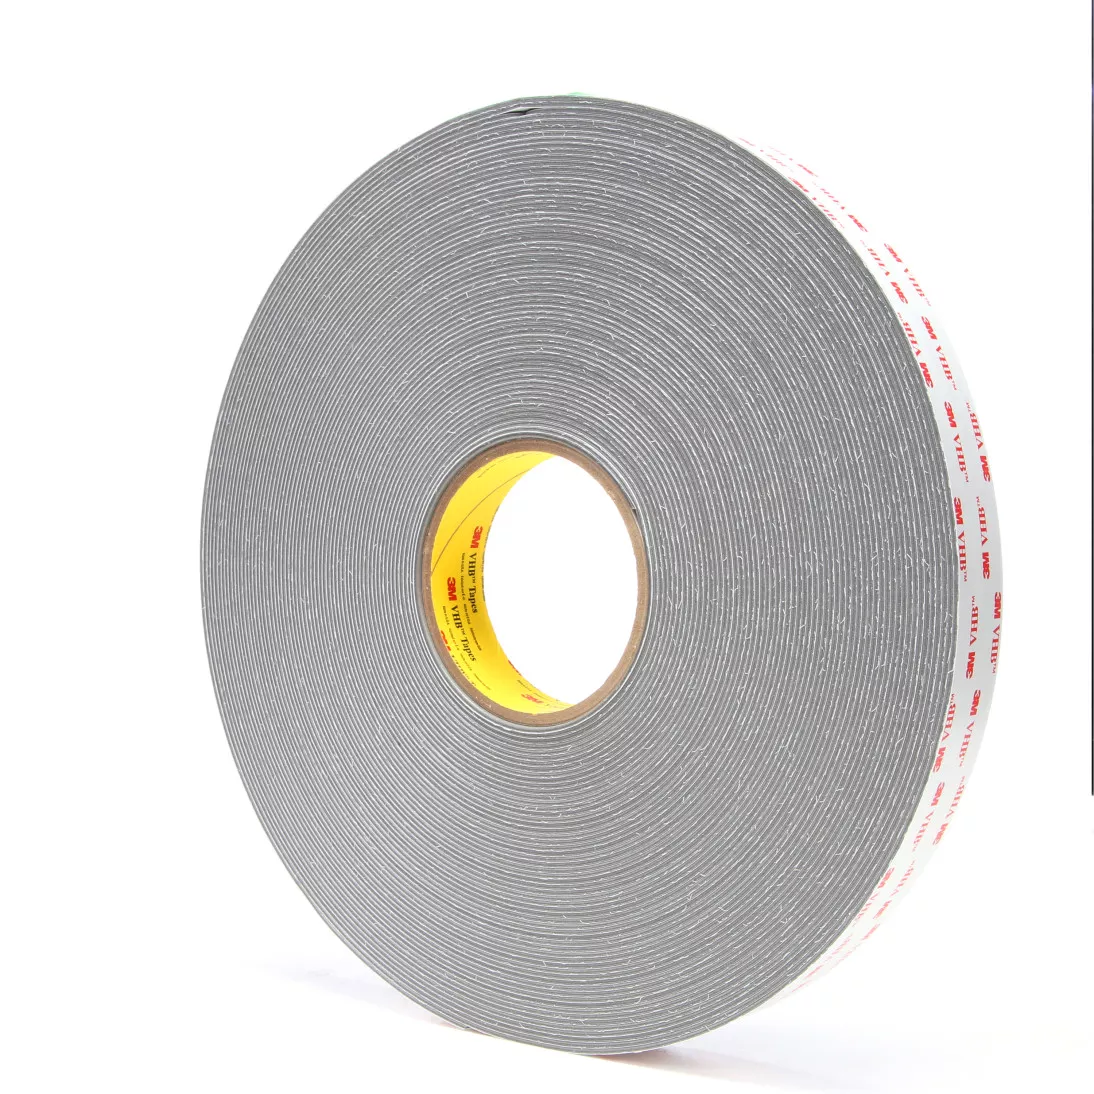 3M™ High Temperature Nylon Film Tape 8555, White, 1 in x 72 yd, 7 mil,
36 rolls per case